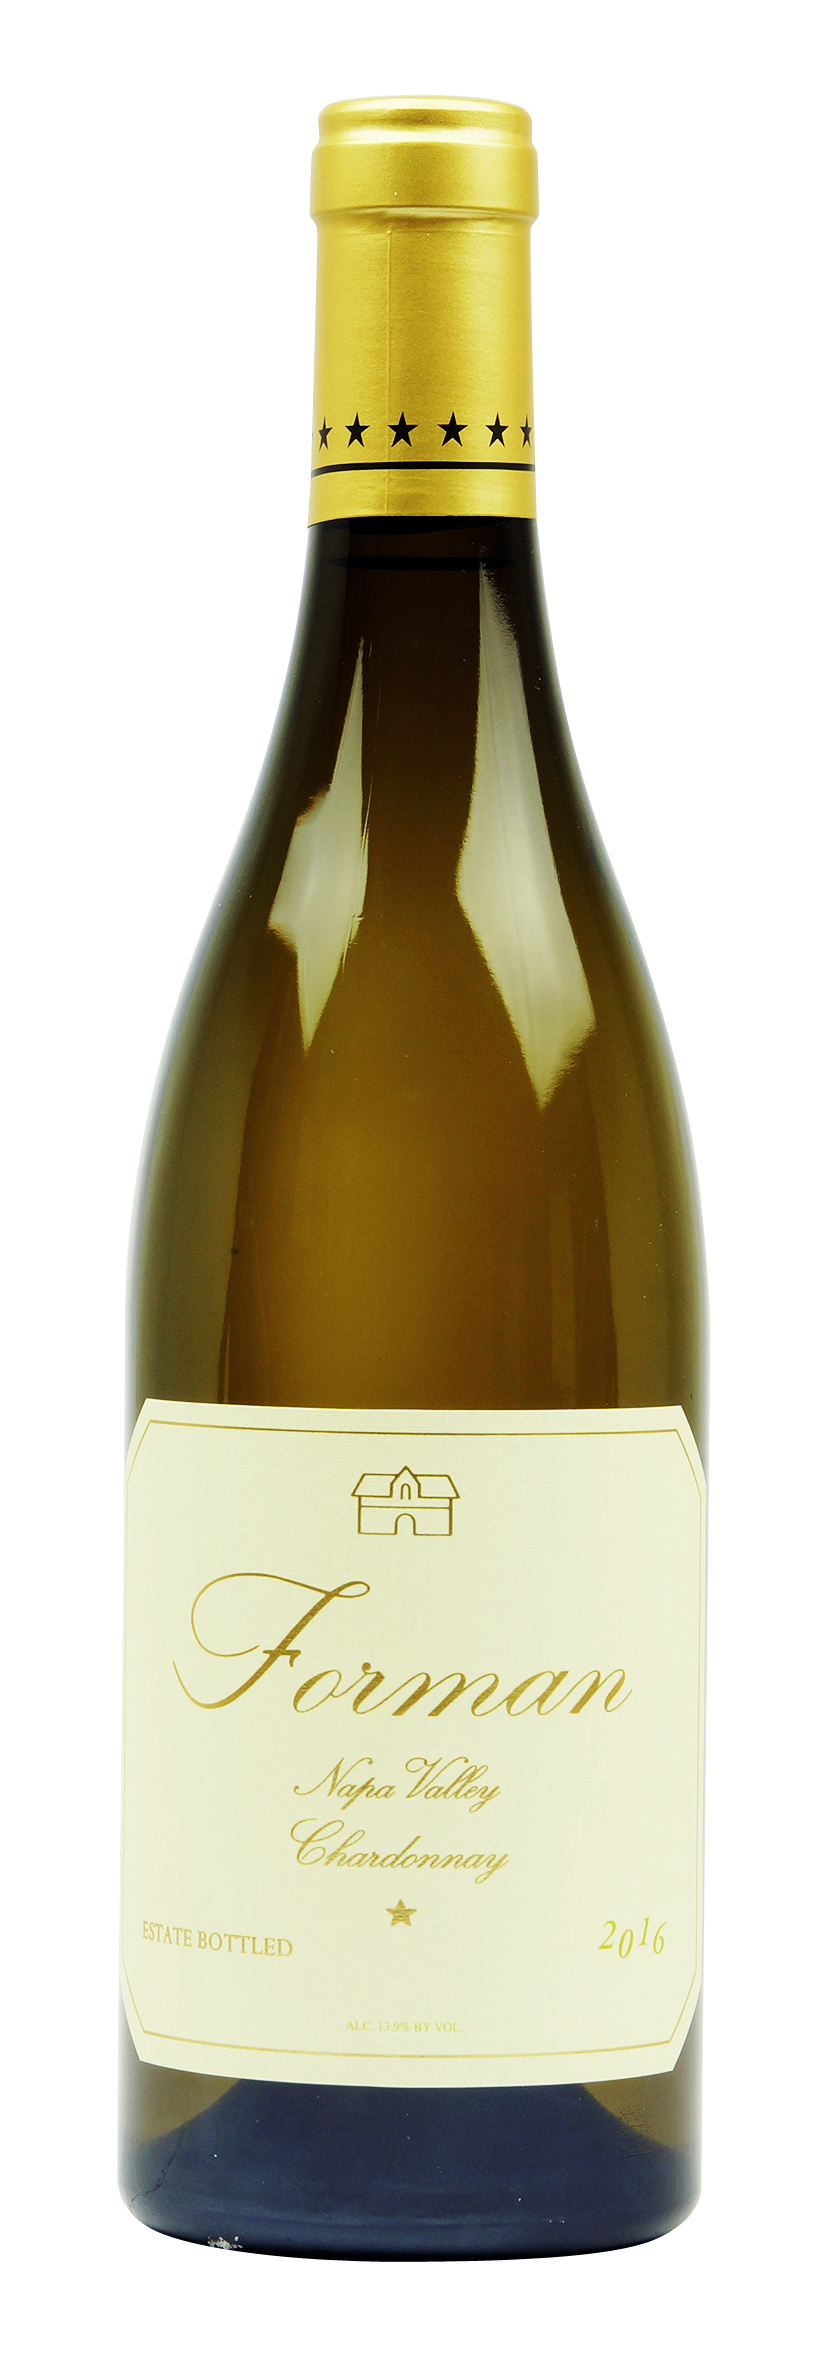 Napa Valley Chardonnay 2016